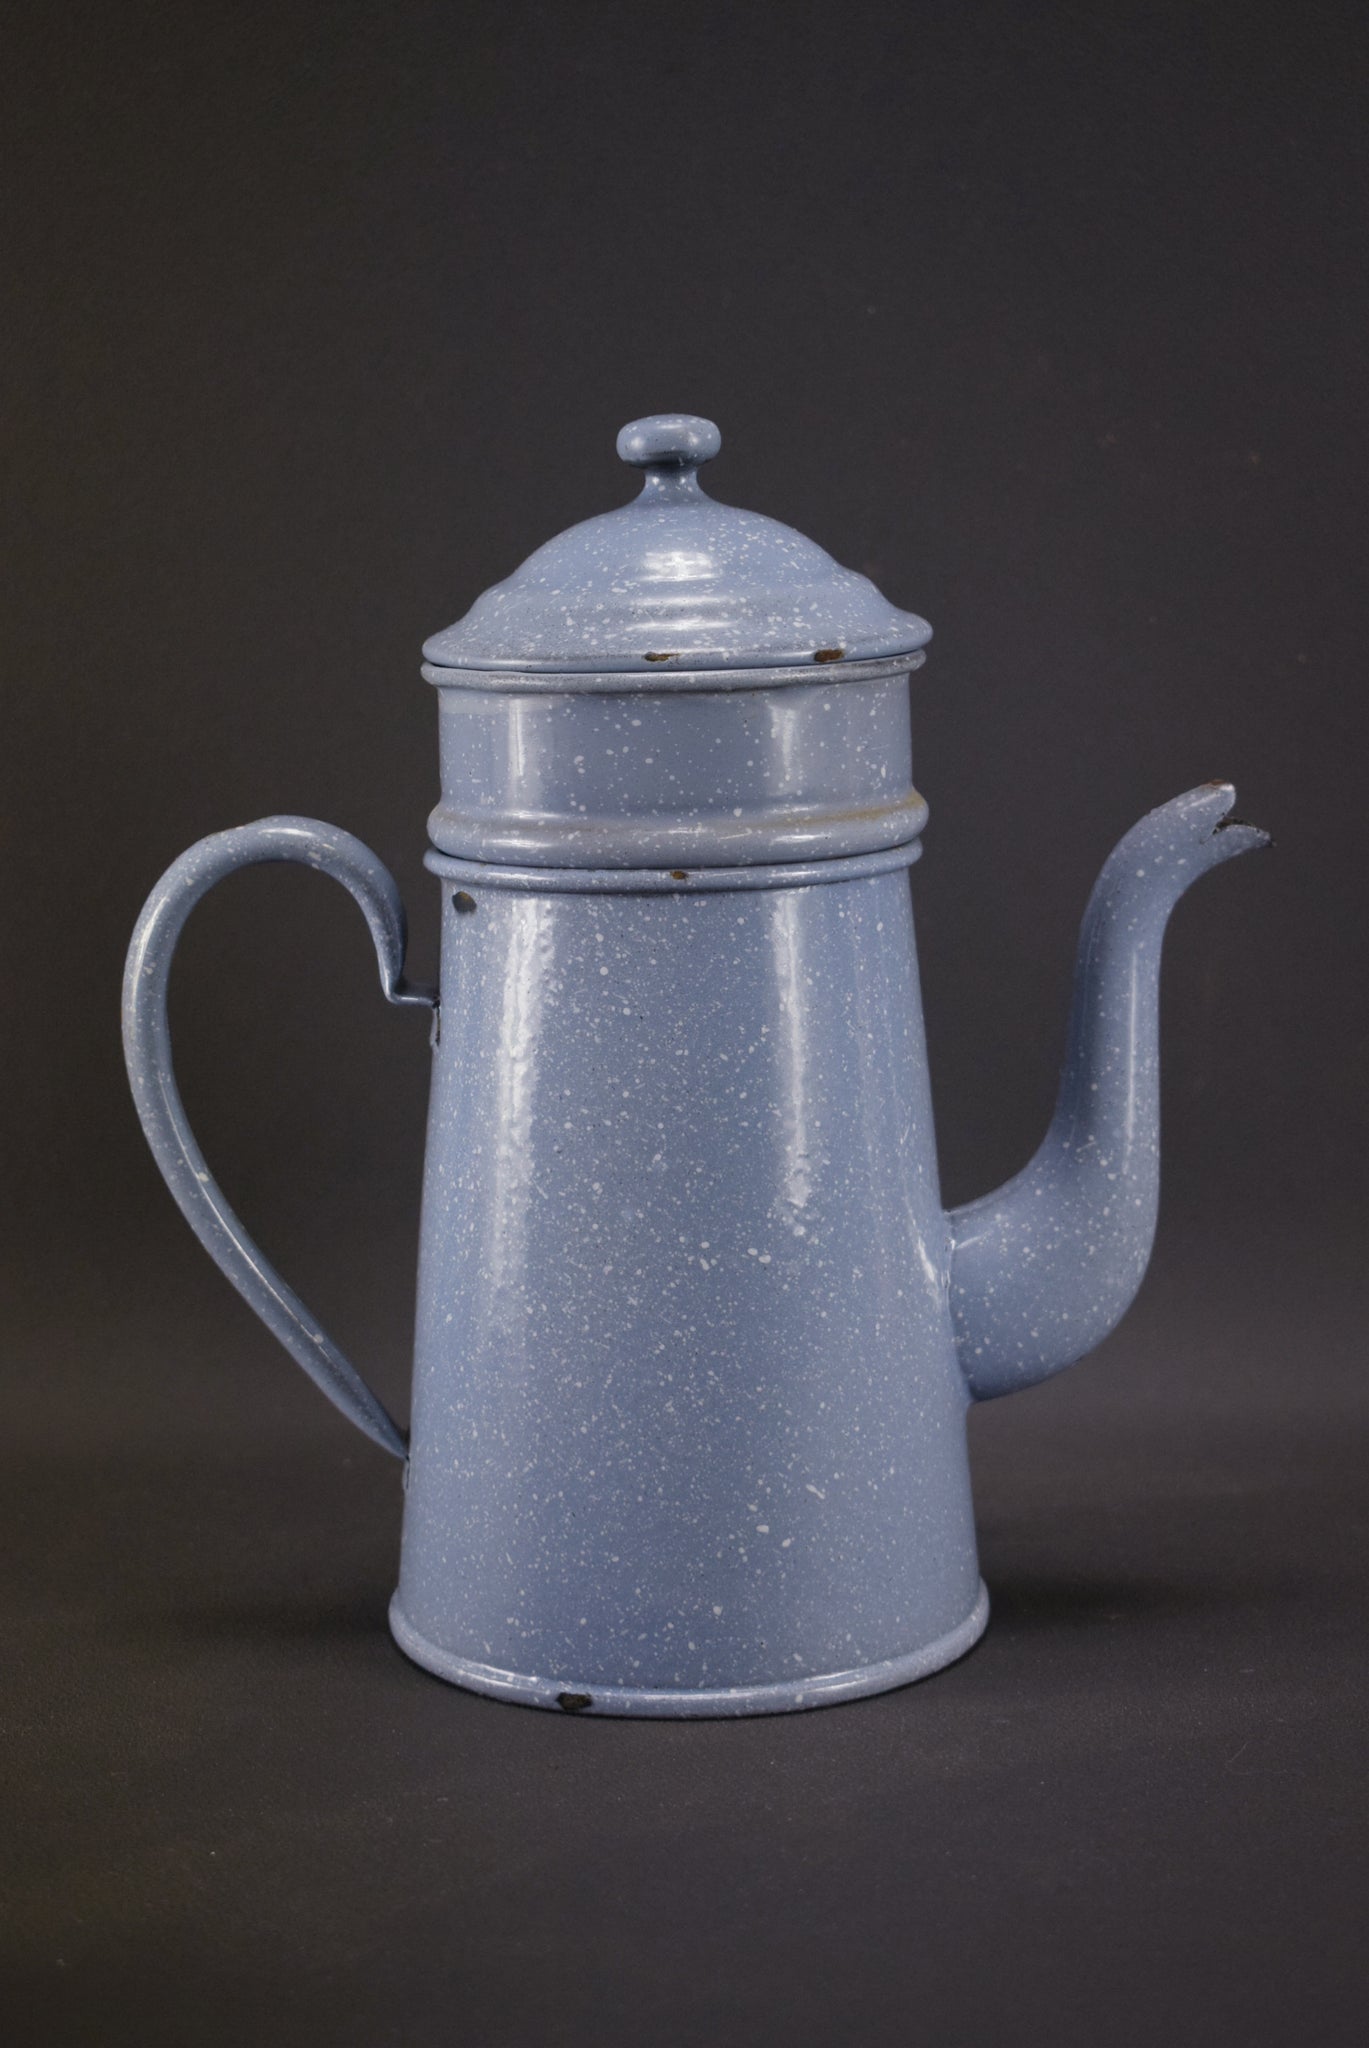 French Vintage Mottled Blue and White Enamel Coffee Pot Shabby Chic Kitchenalia